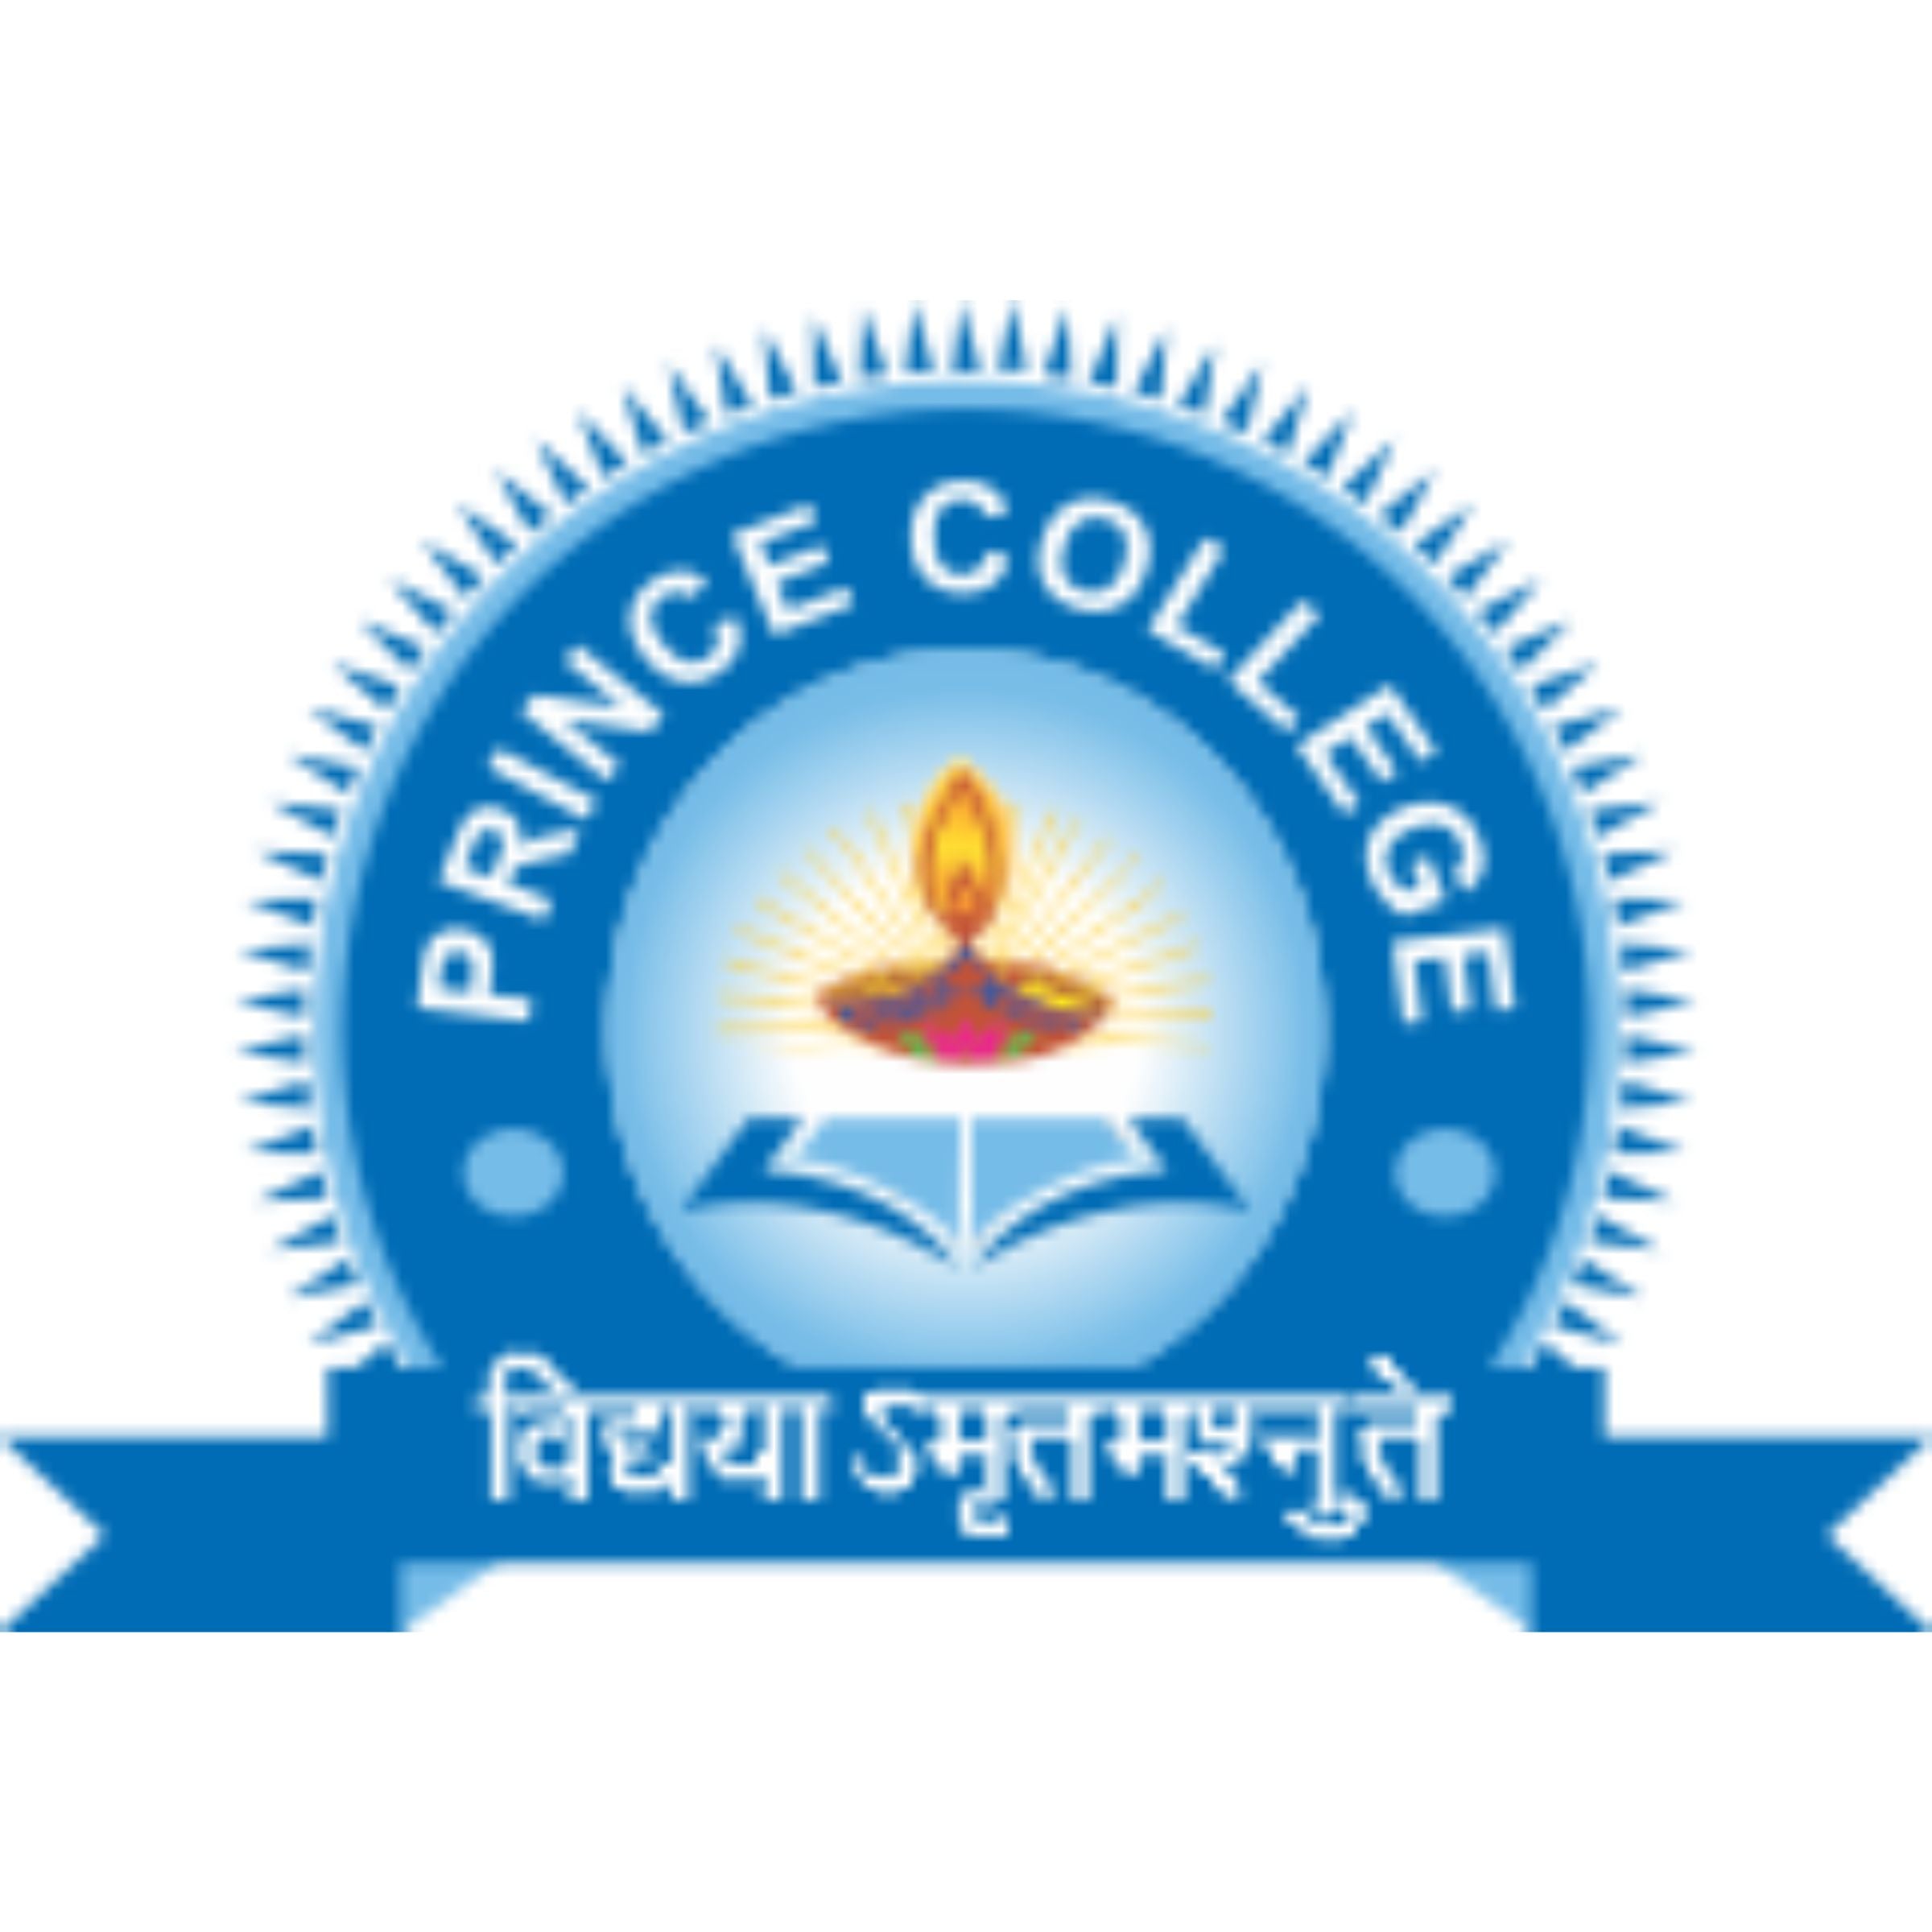 Prince college logo